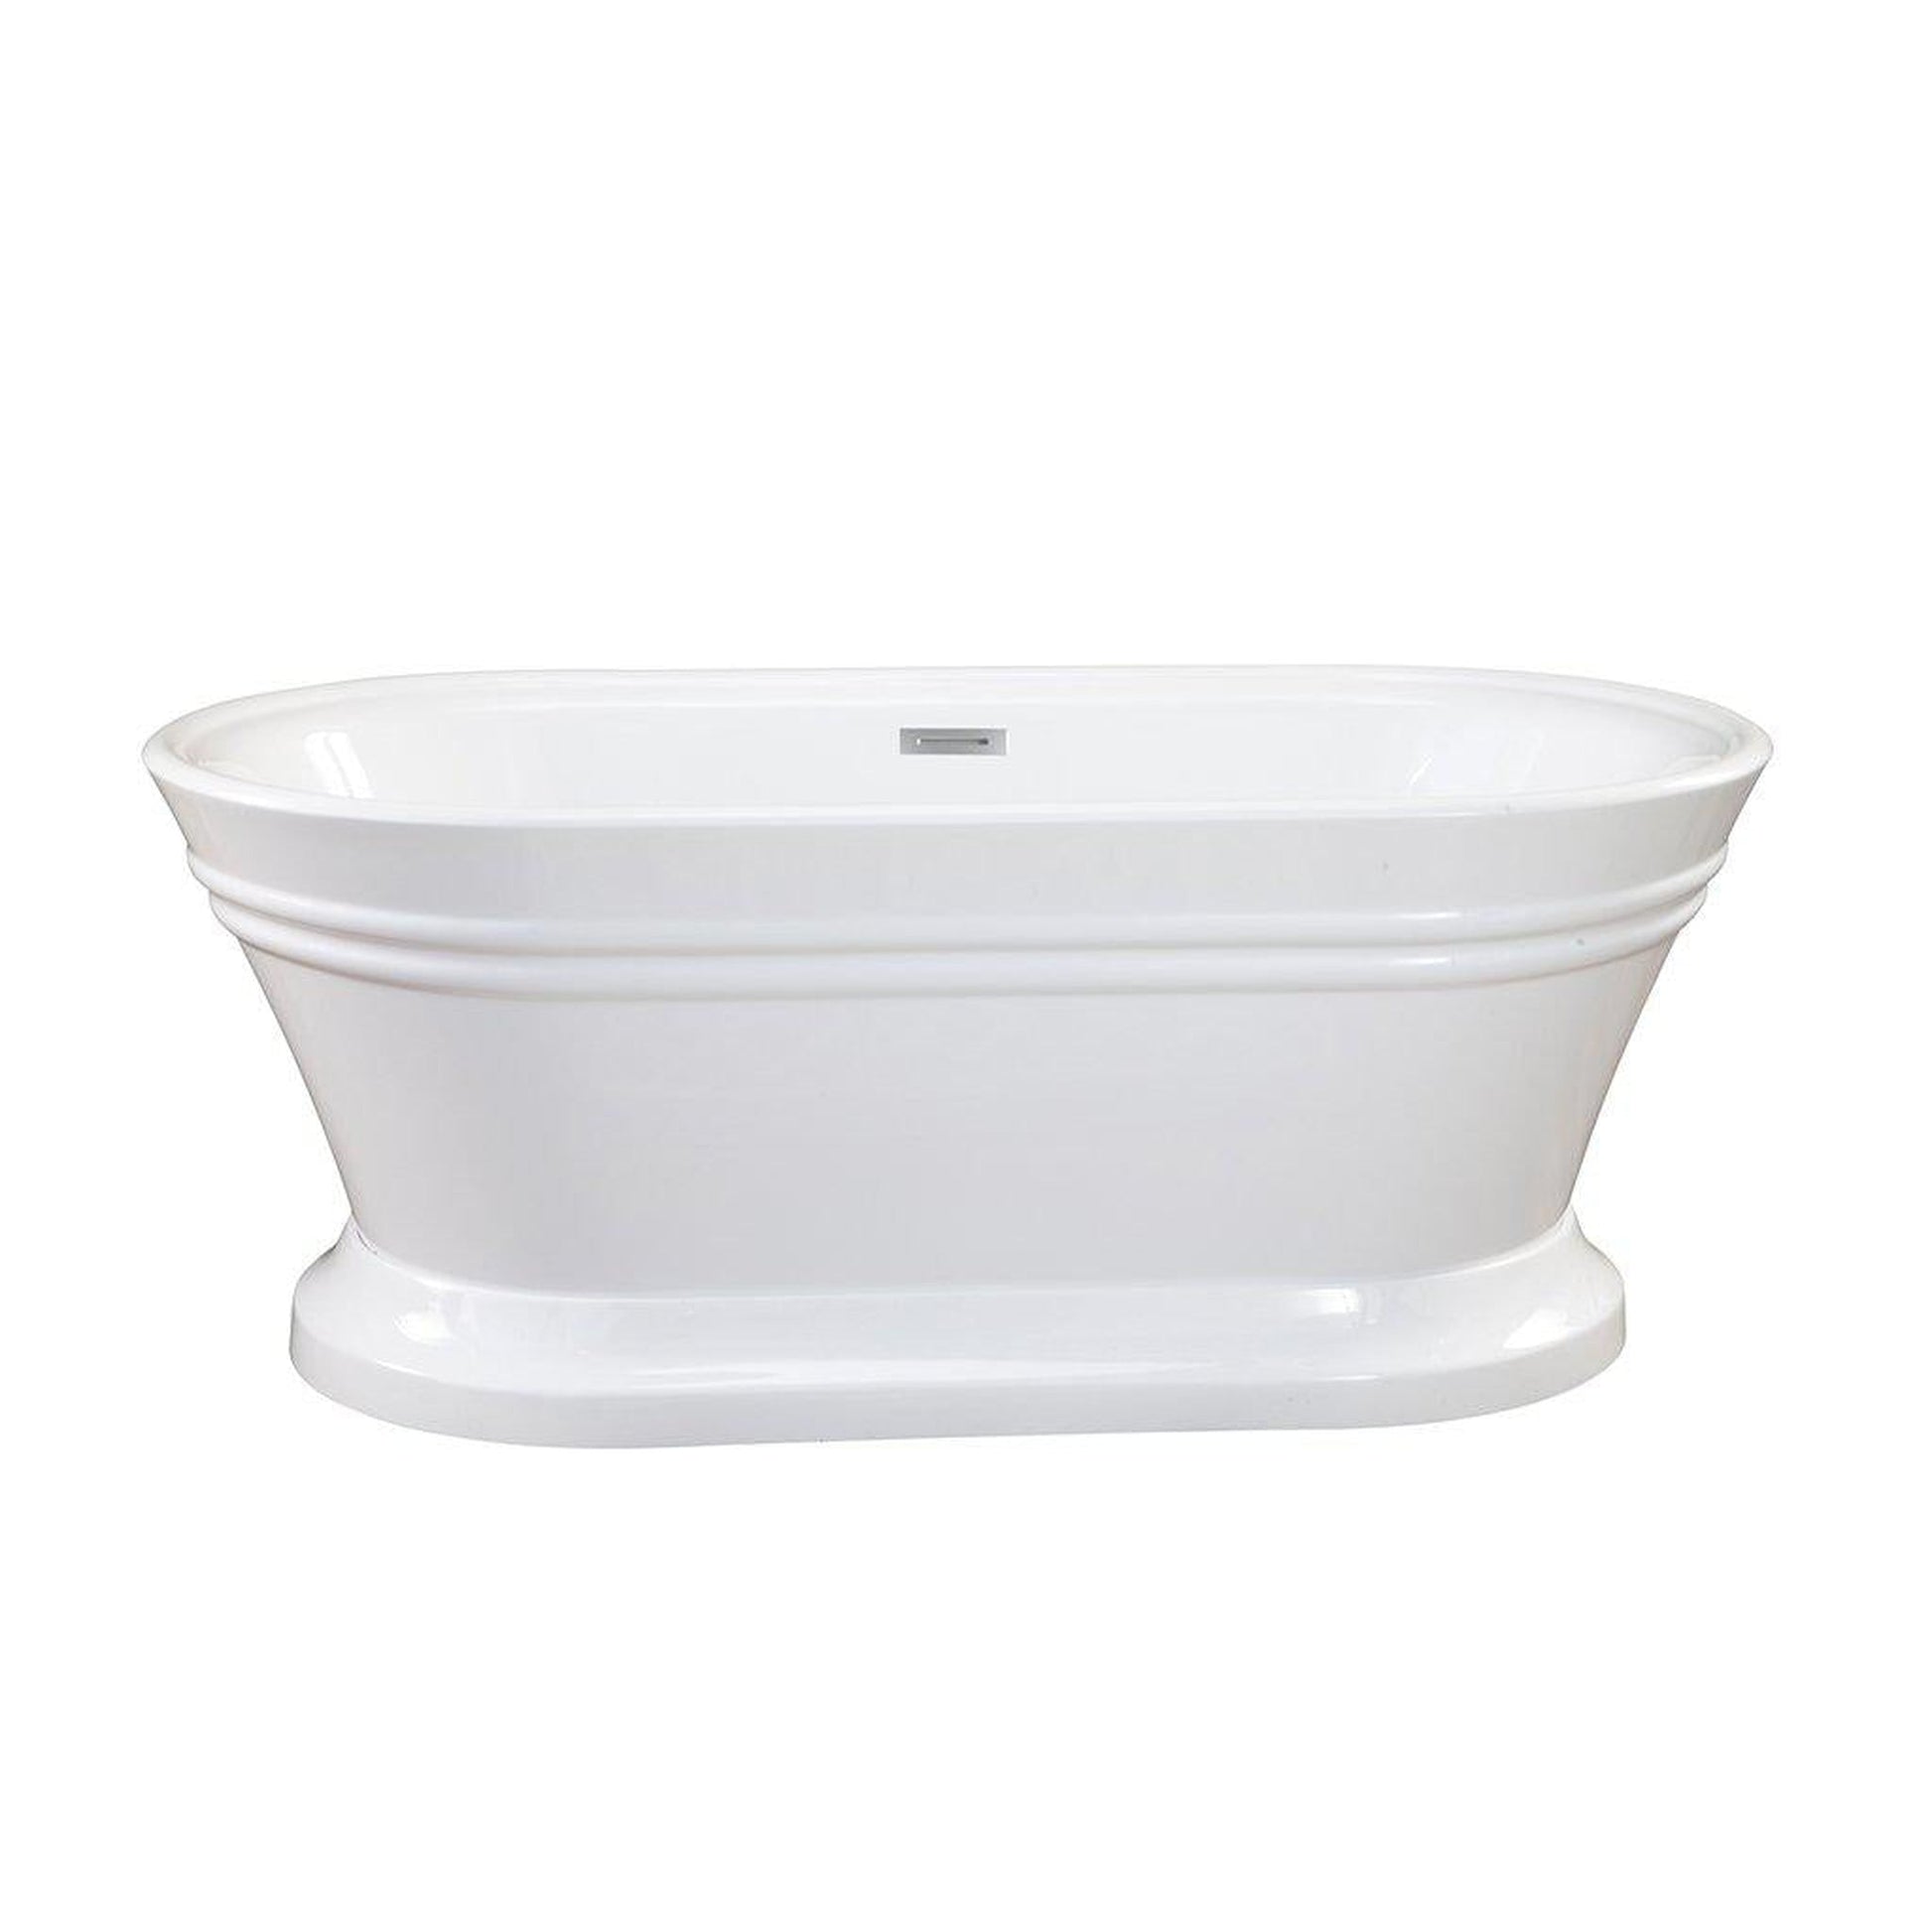 Altair Solace 67" x 31" White Acrylic Freestanding Bathtub